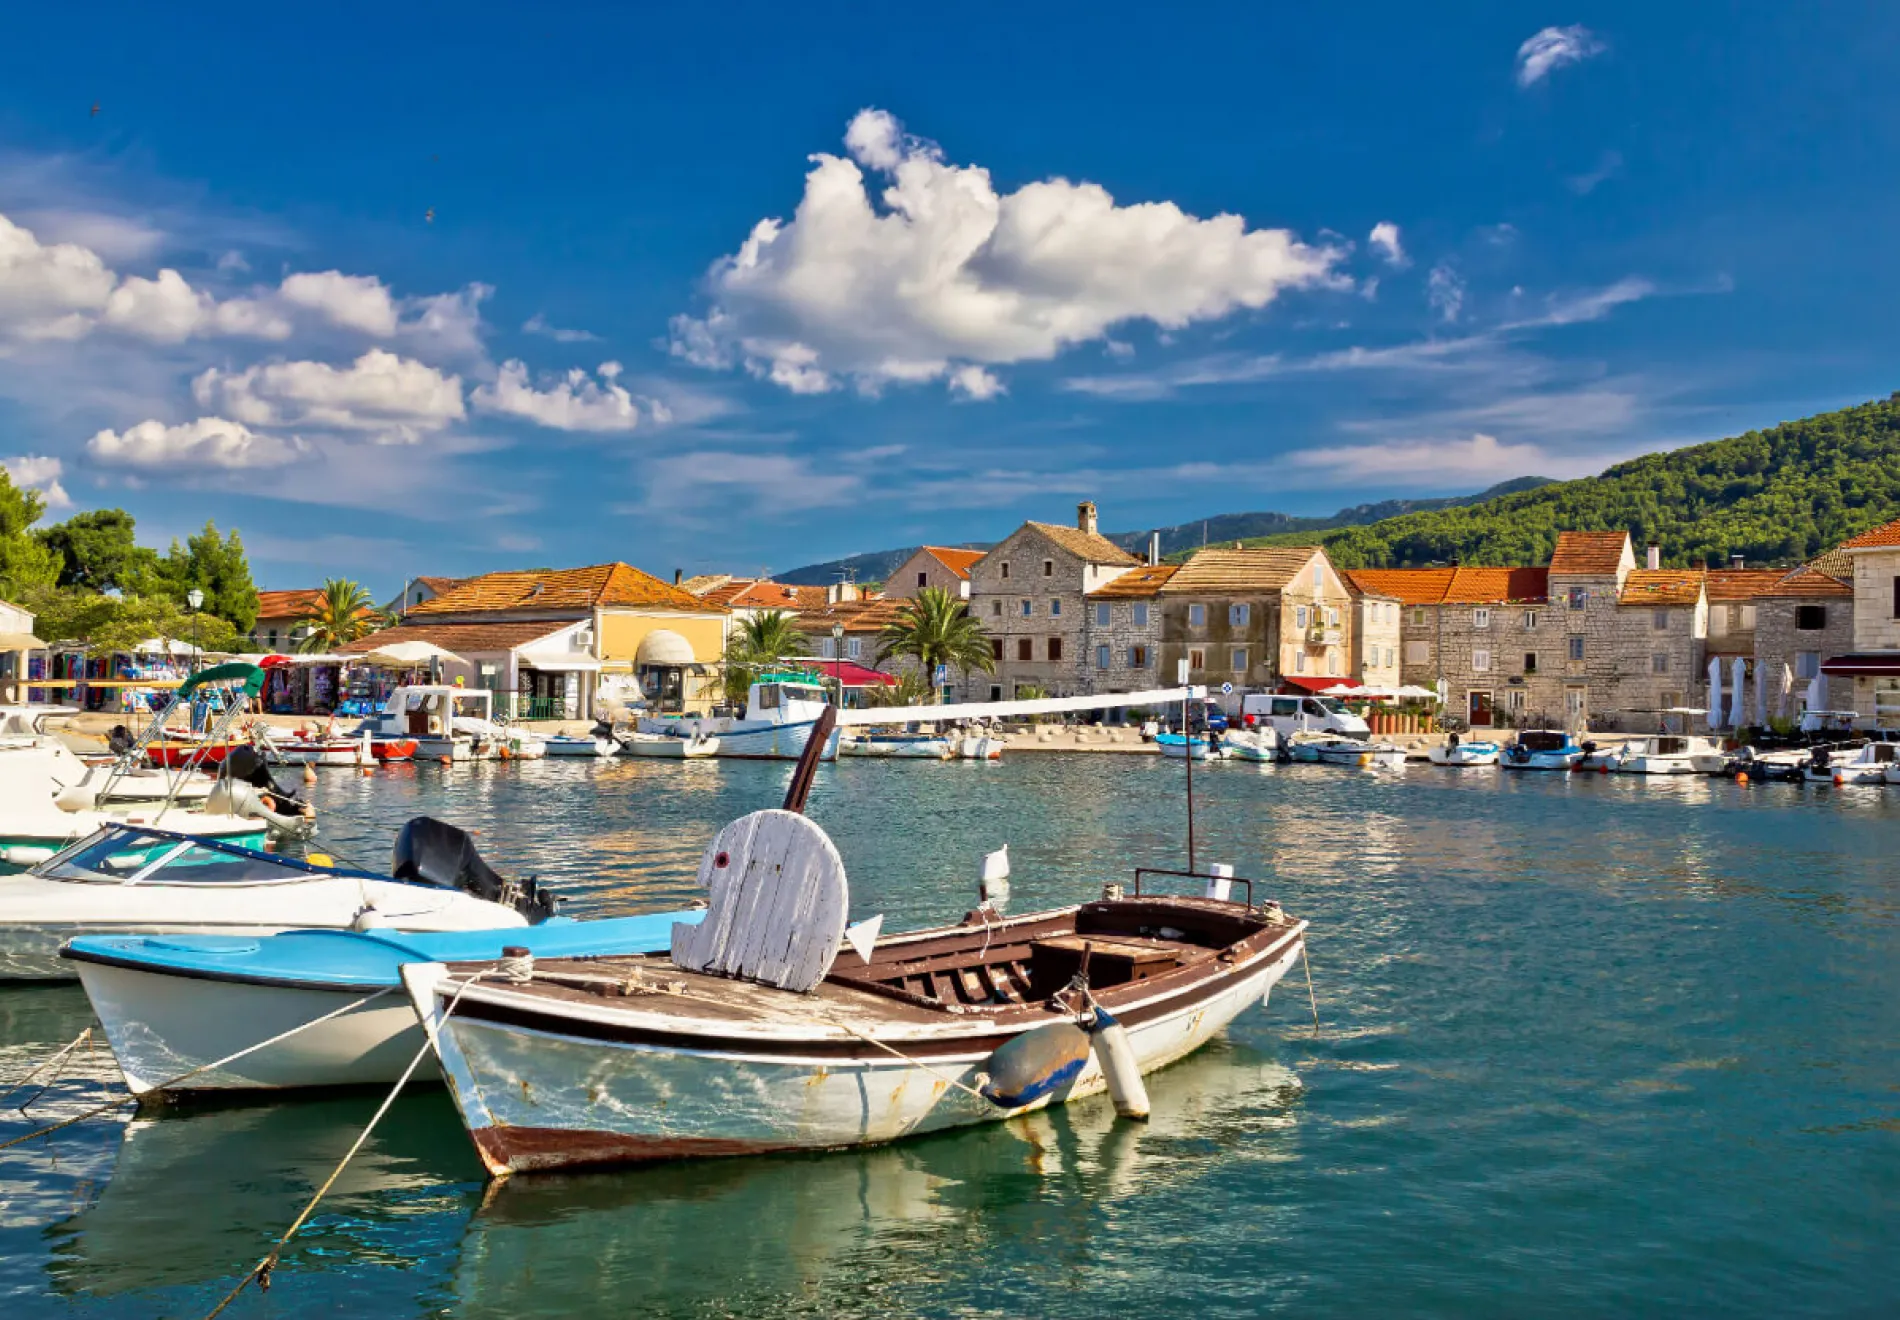 Stari Grad Hvar island in Croatia